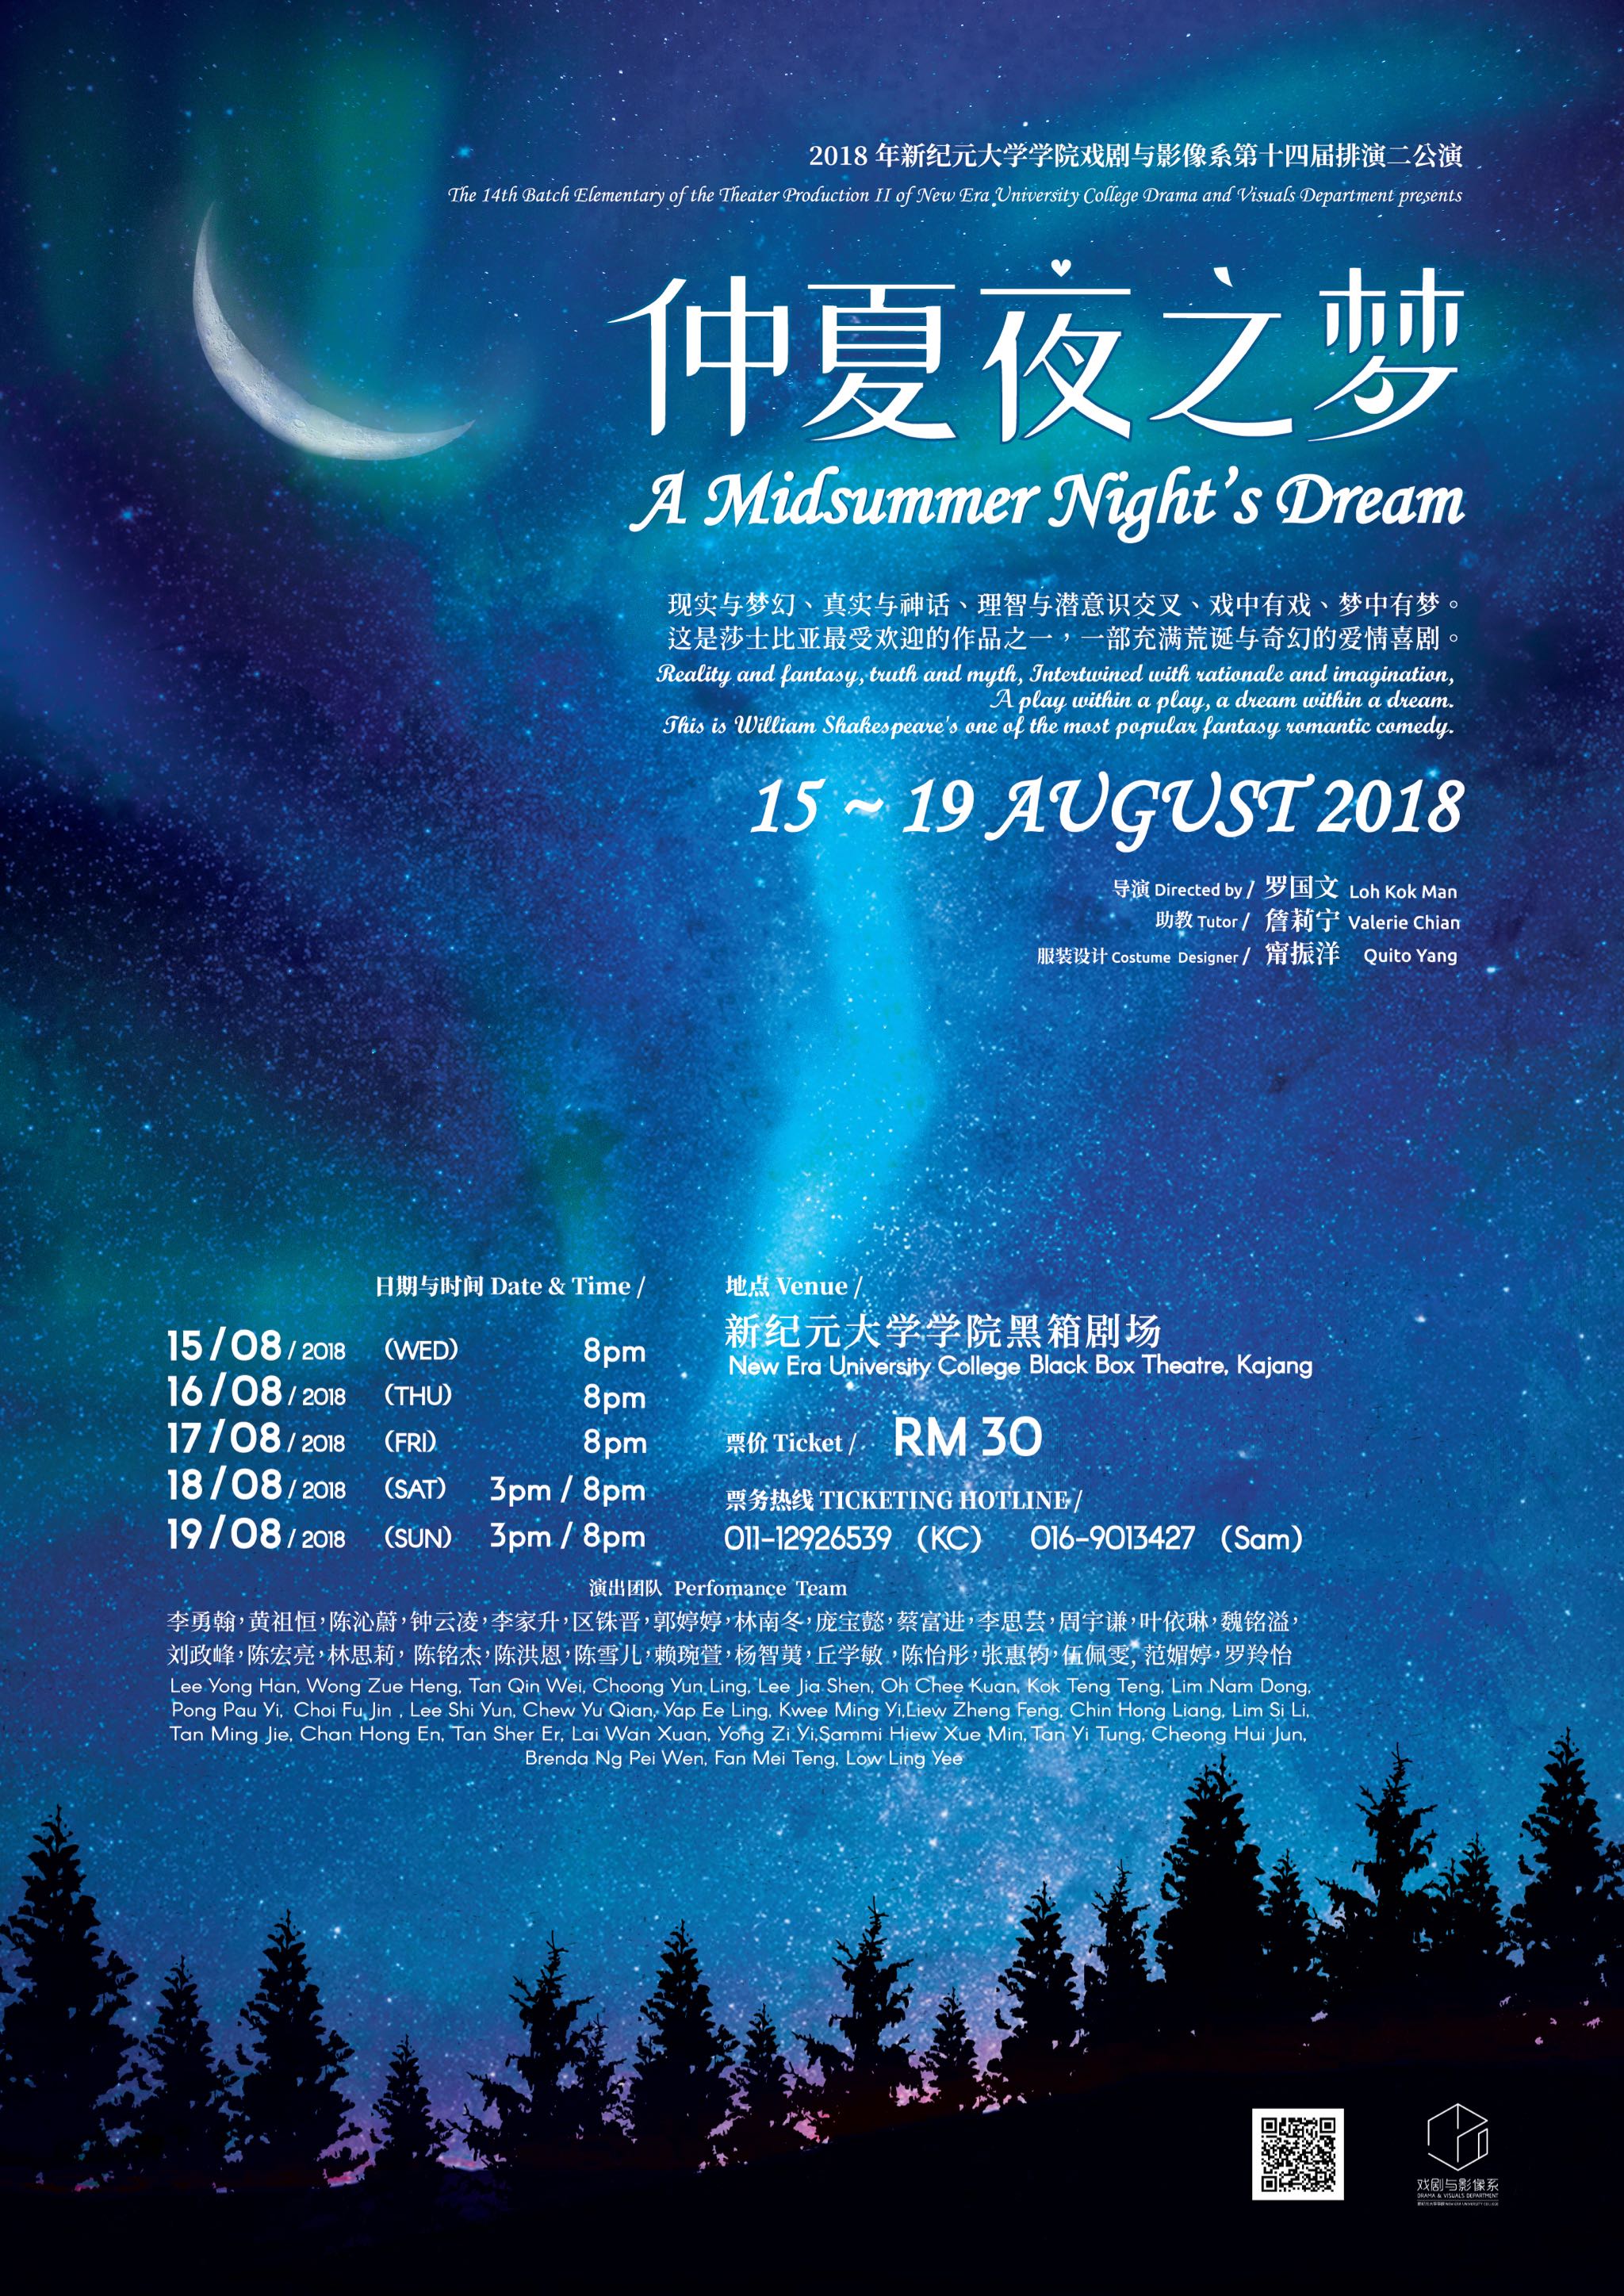 2018 A Midsummer Night's Dream Poster